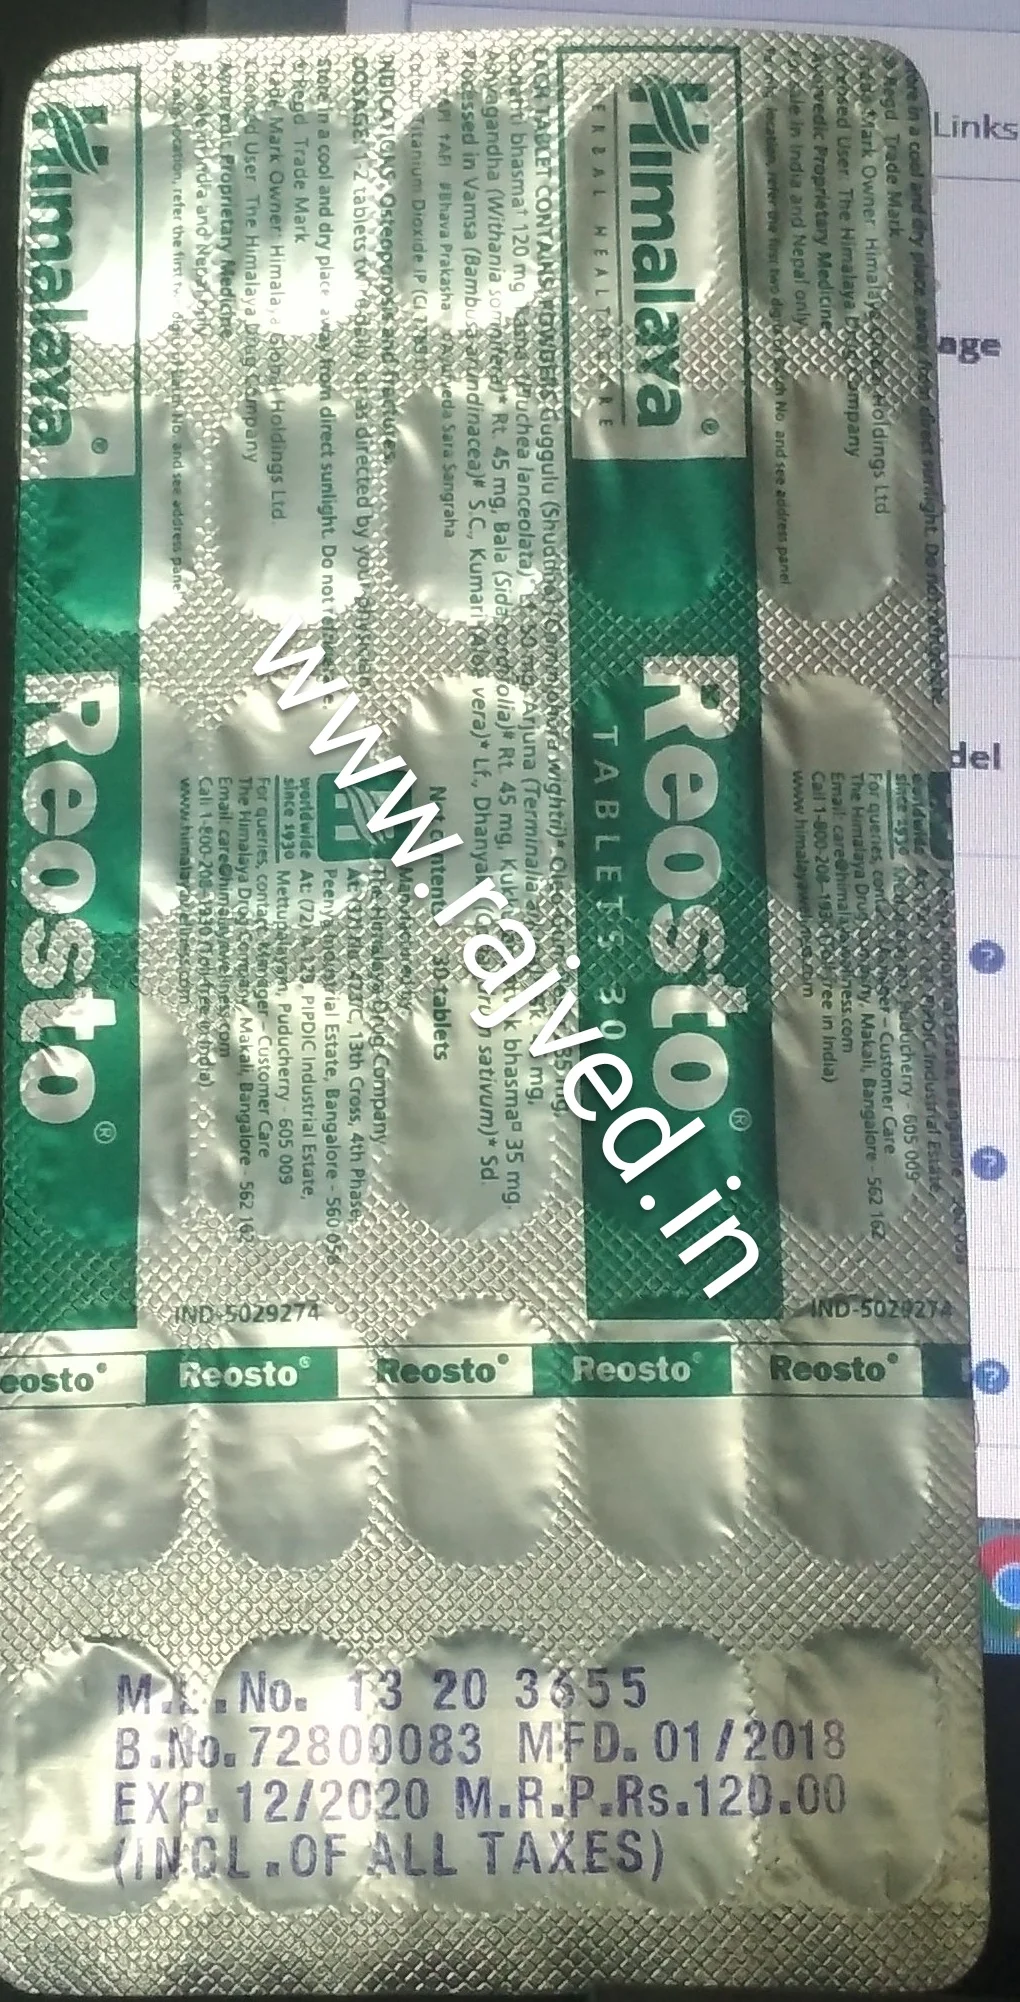 reosto tablet 60tab upto 15% off the himalaya drug company